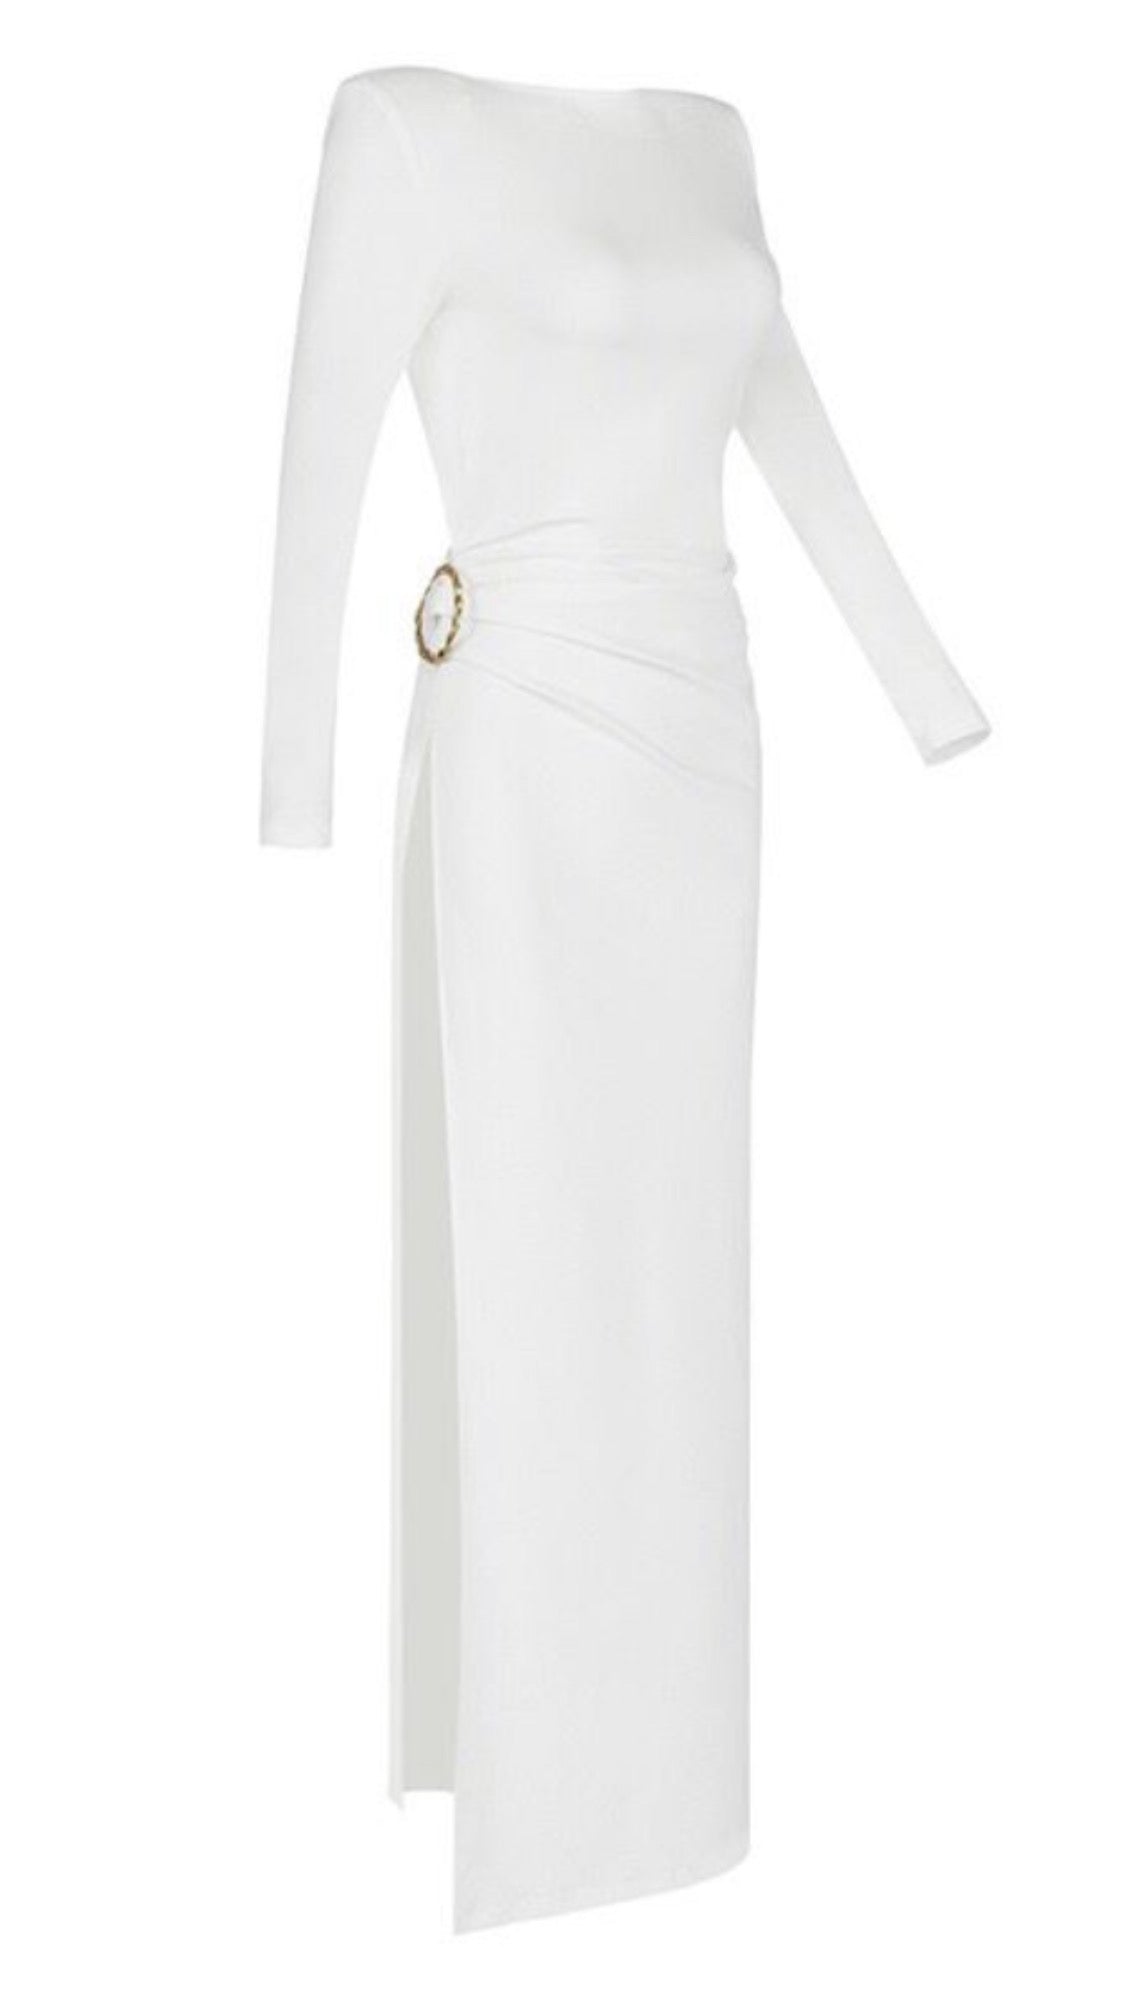 Semiya || White dress